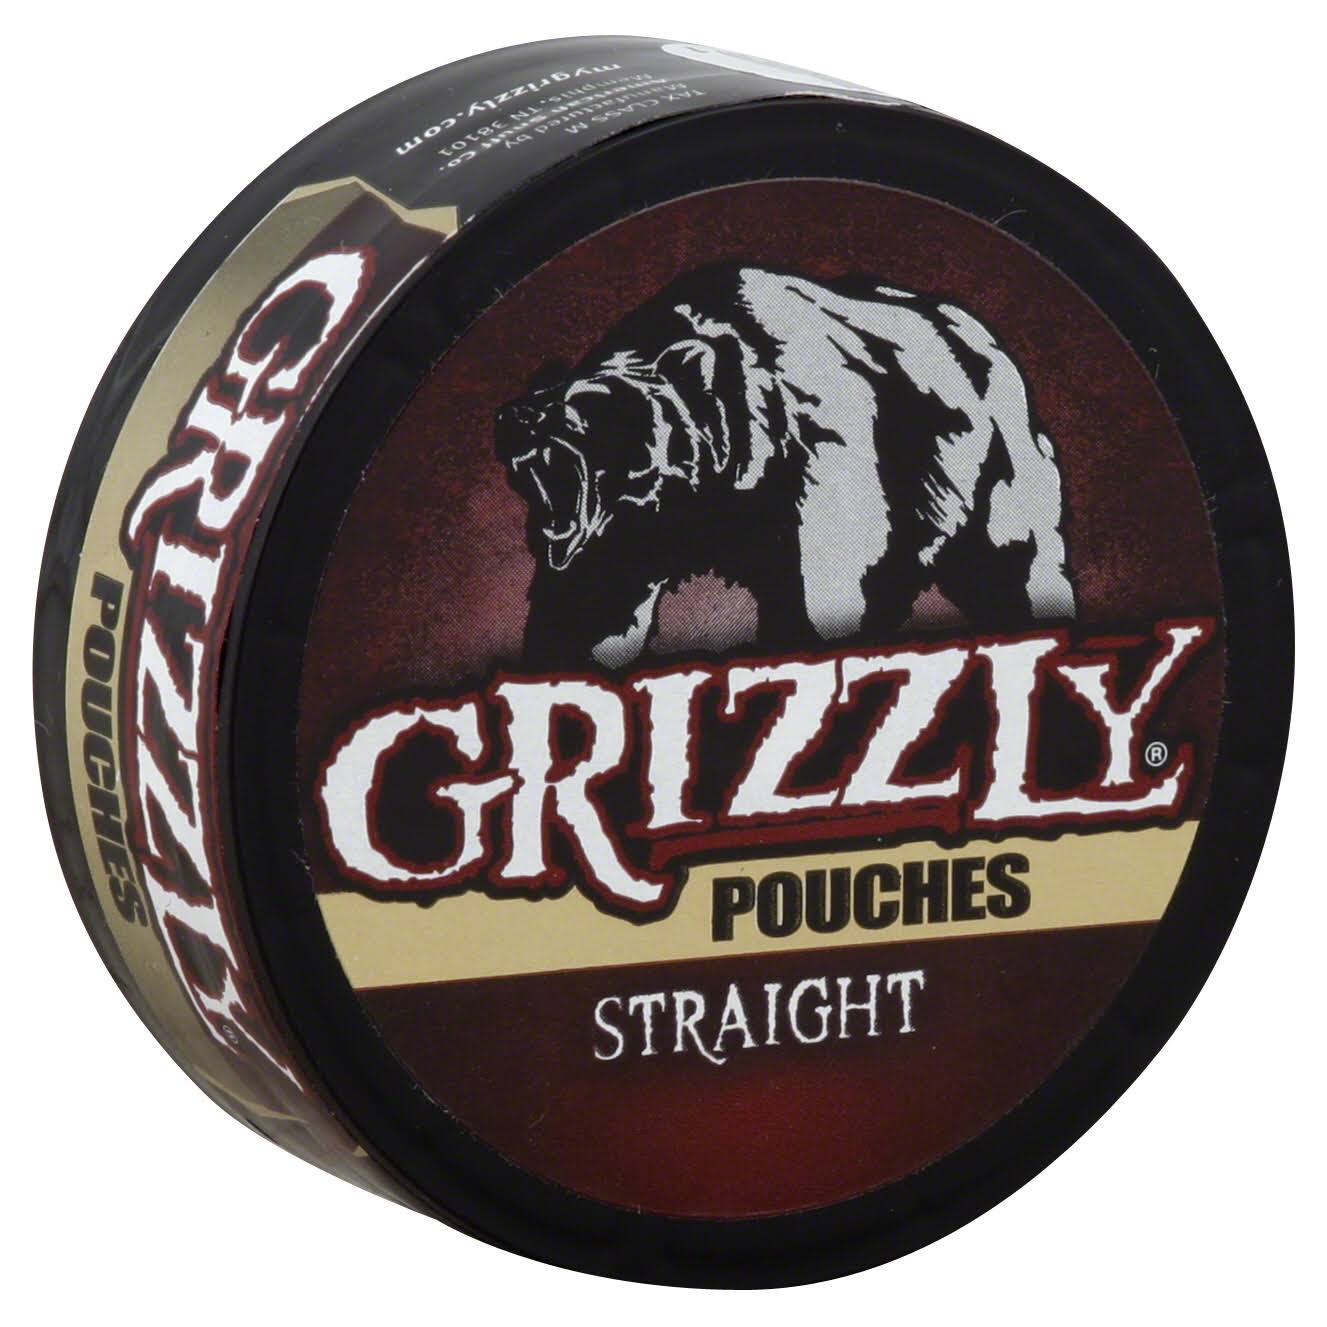 Grizzly Smokeless Tobacco, Pouches, Straight - 0.82 oz